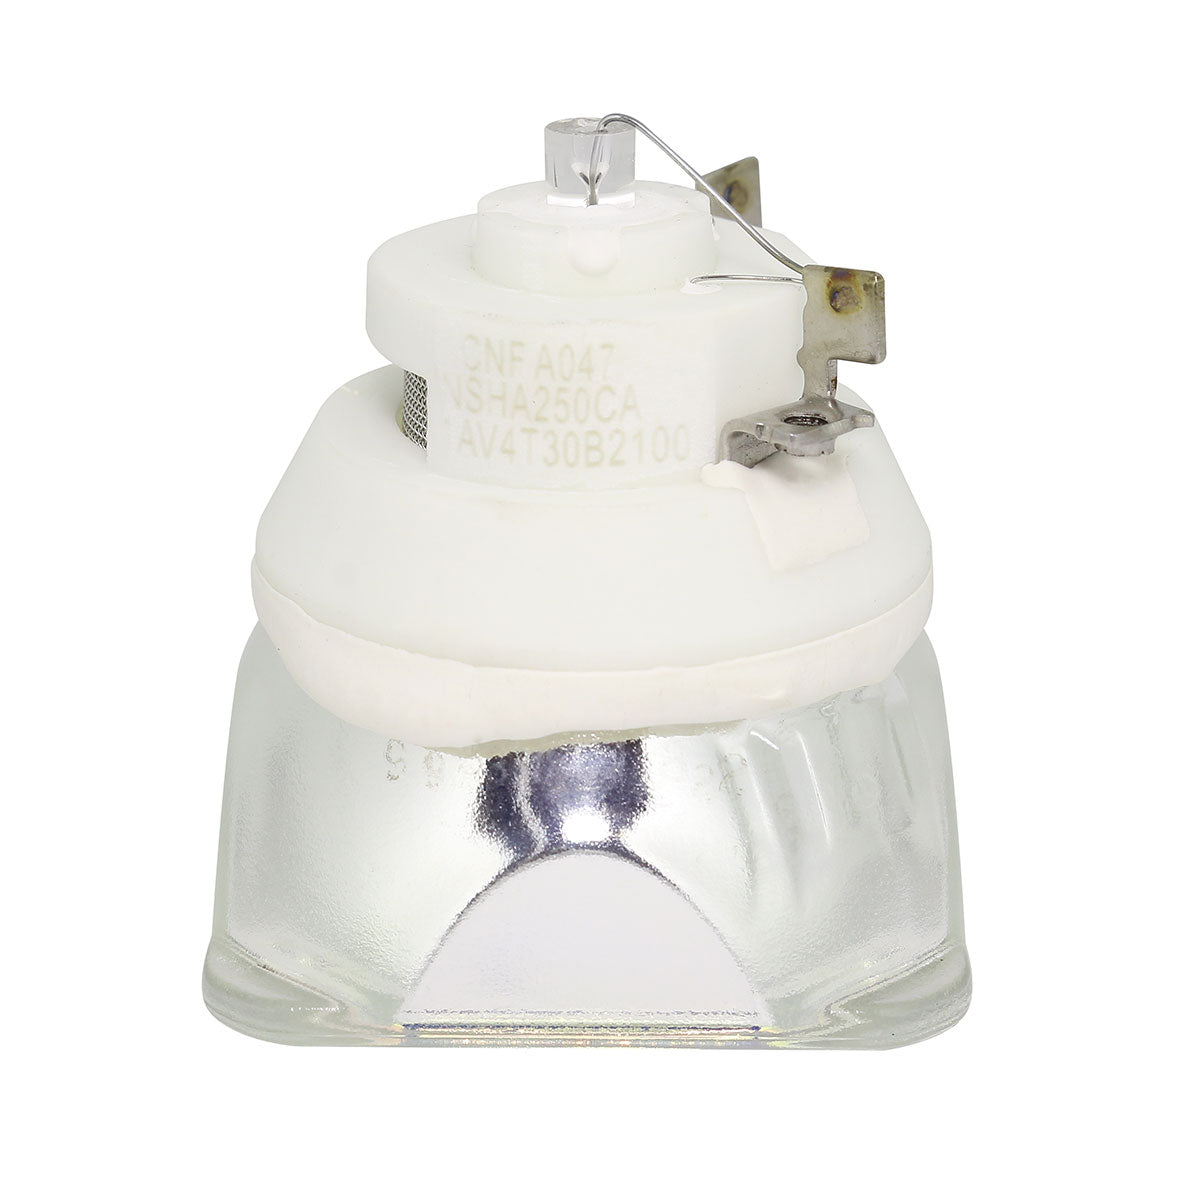 Epson V13H010L89 Ushio Projector Bare Lamp